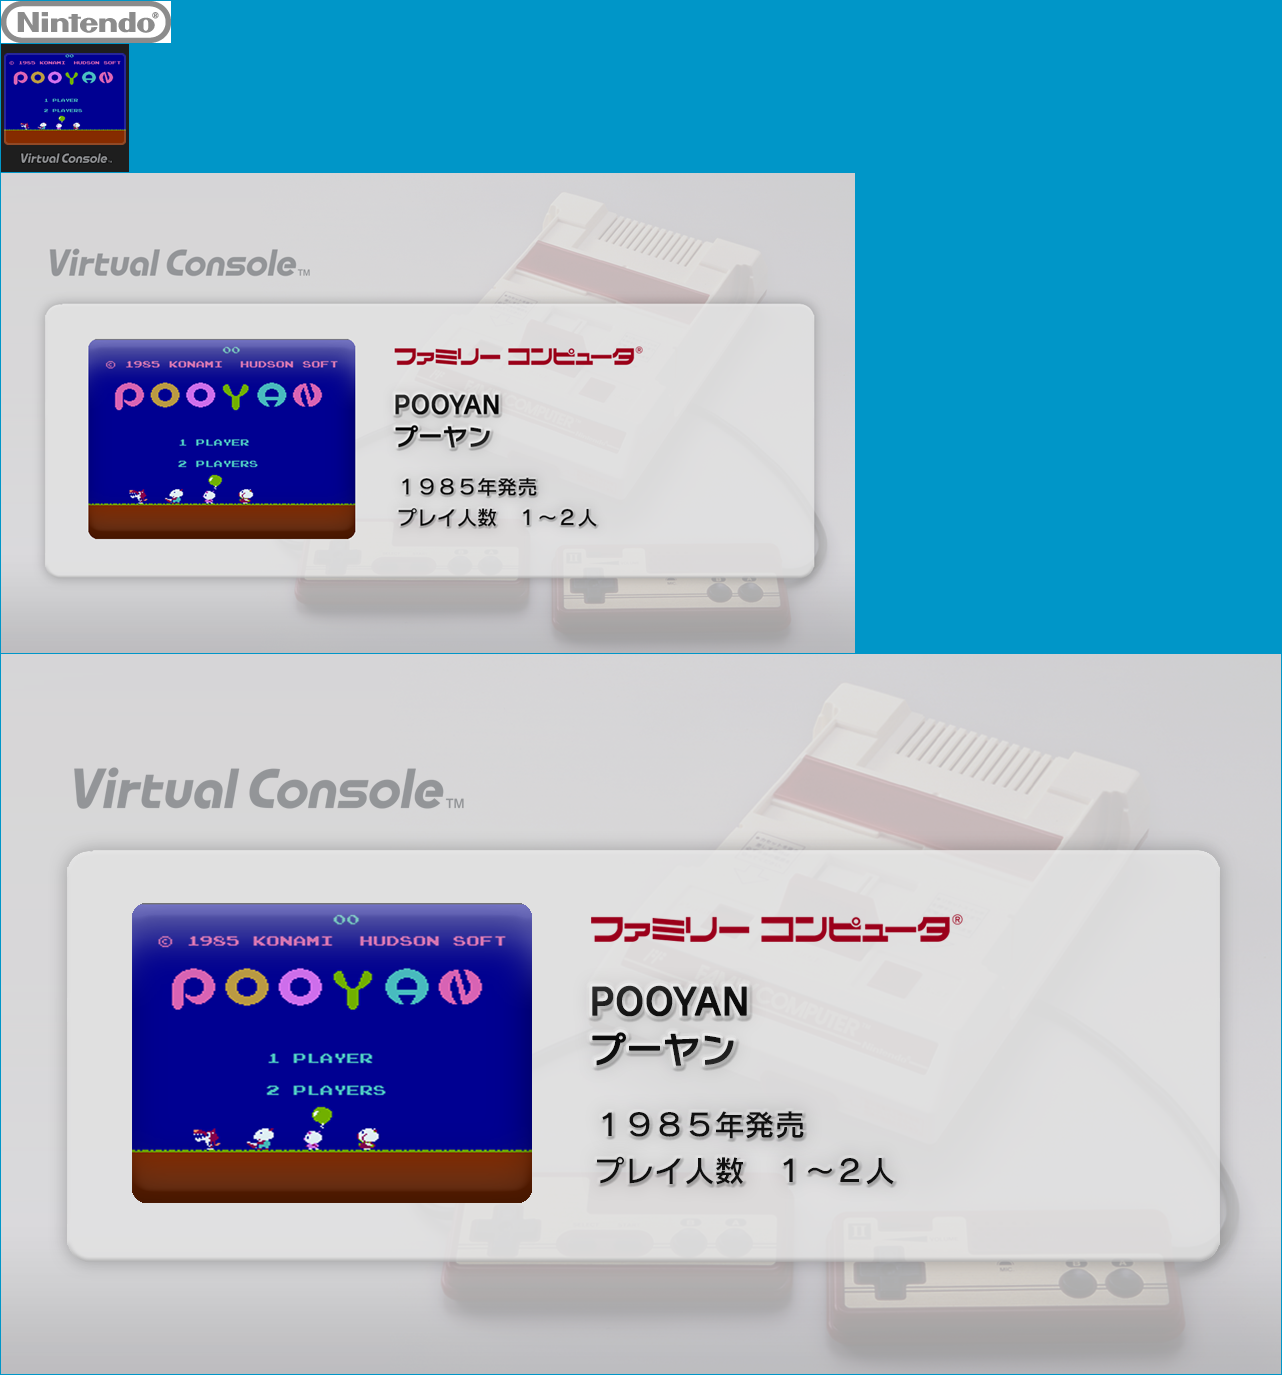 Virtual Console - Pooyan